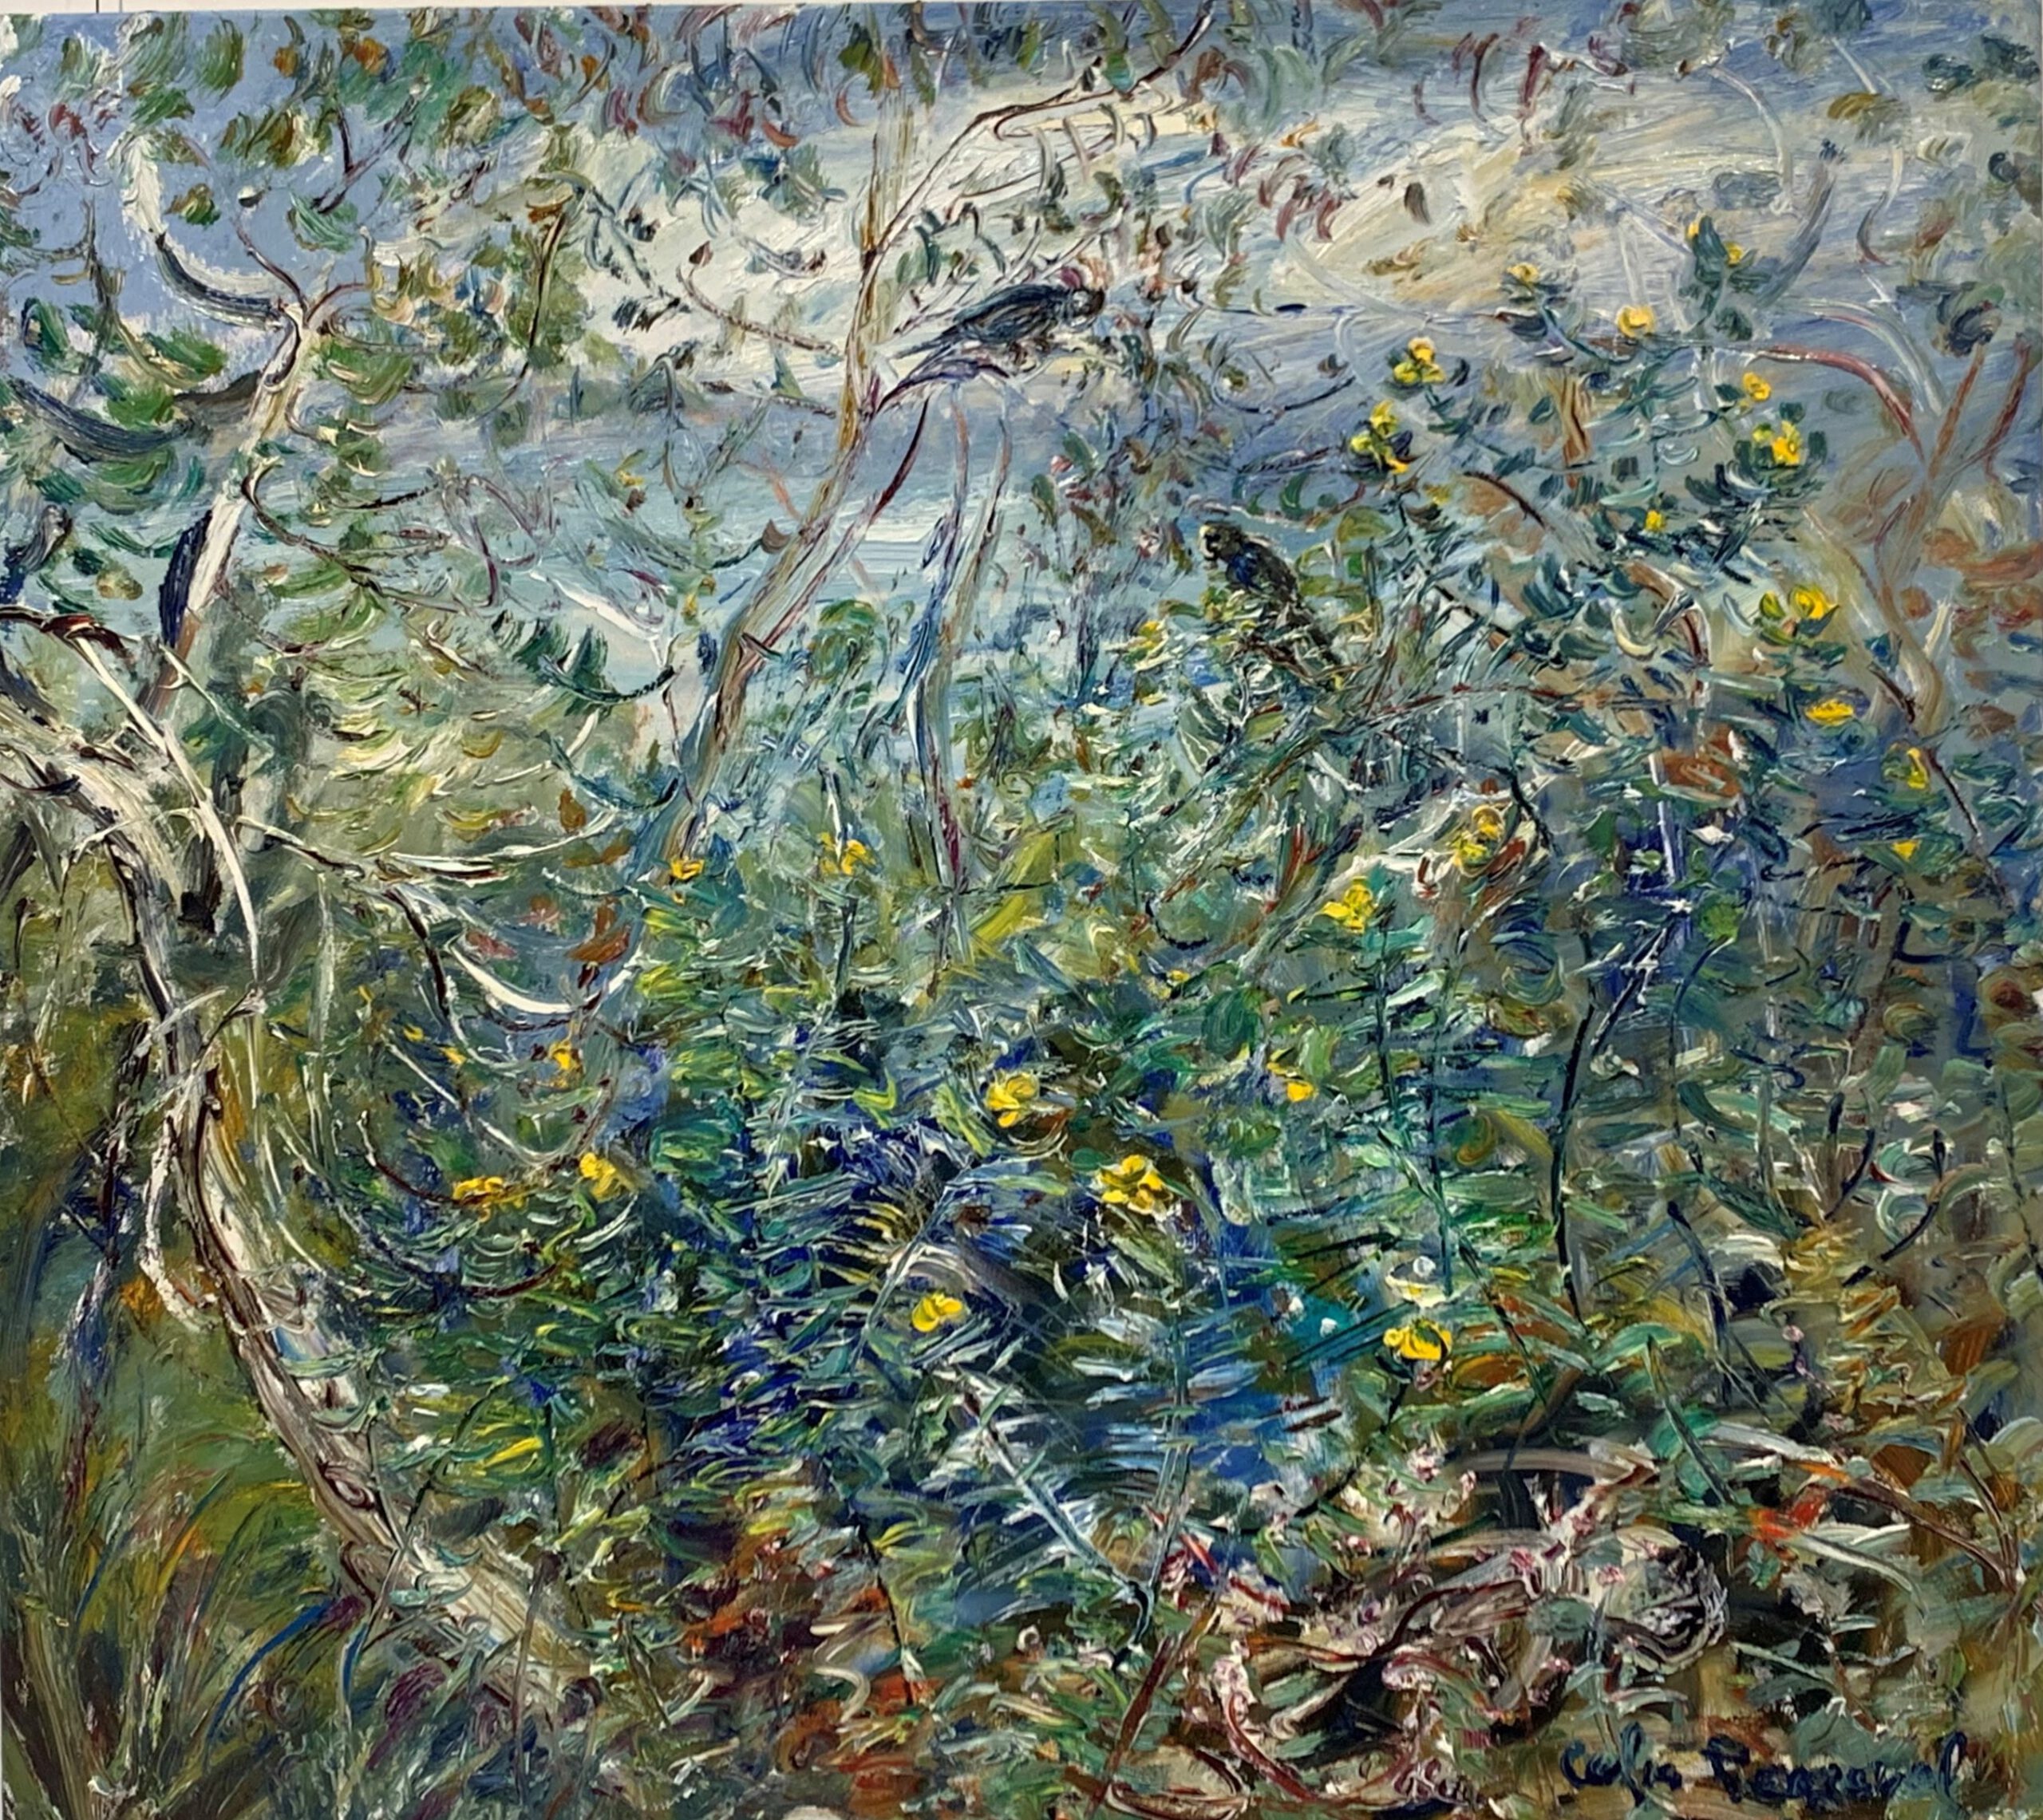 Celia Perceval 'Cockies in yellow flowering scrub' 90 x 100cm $15,000